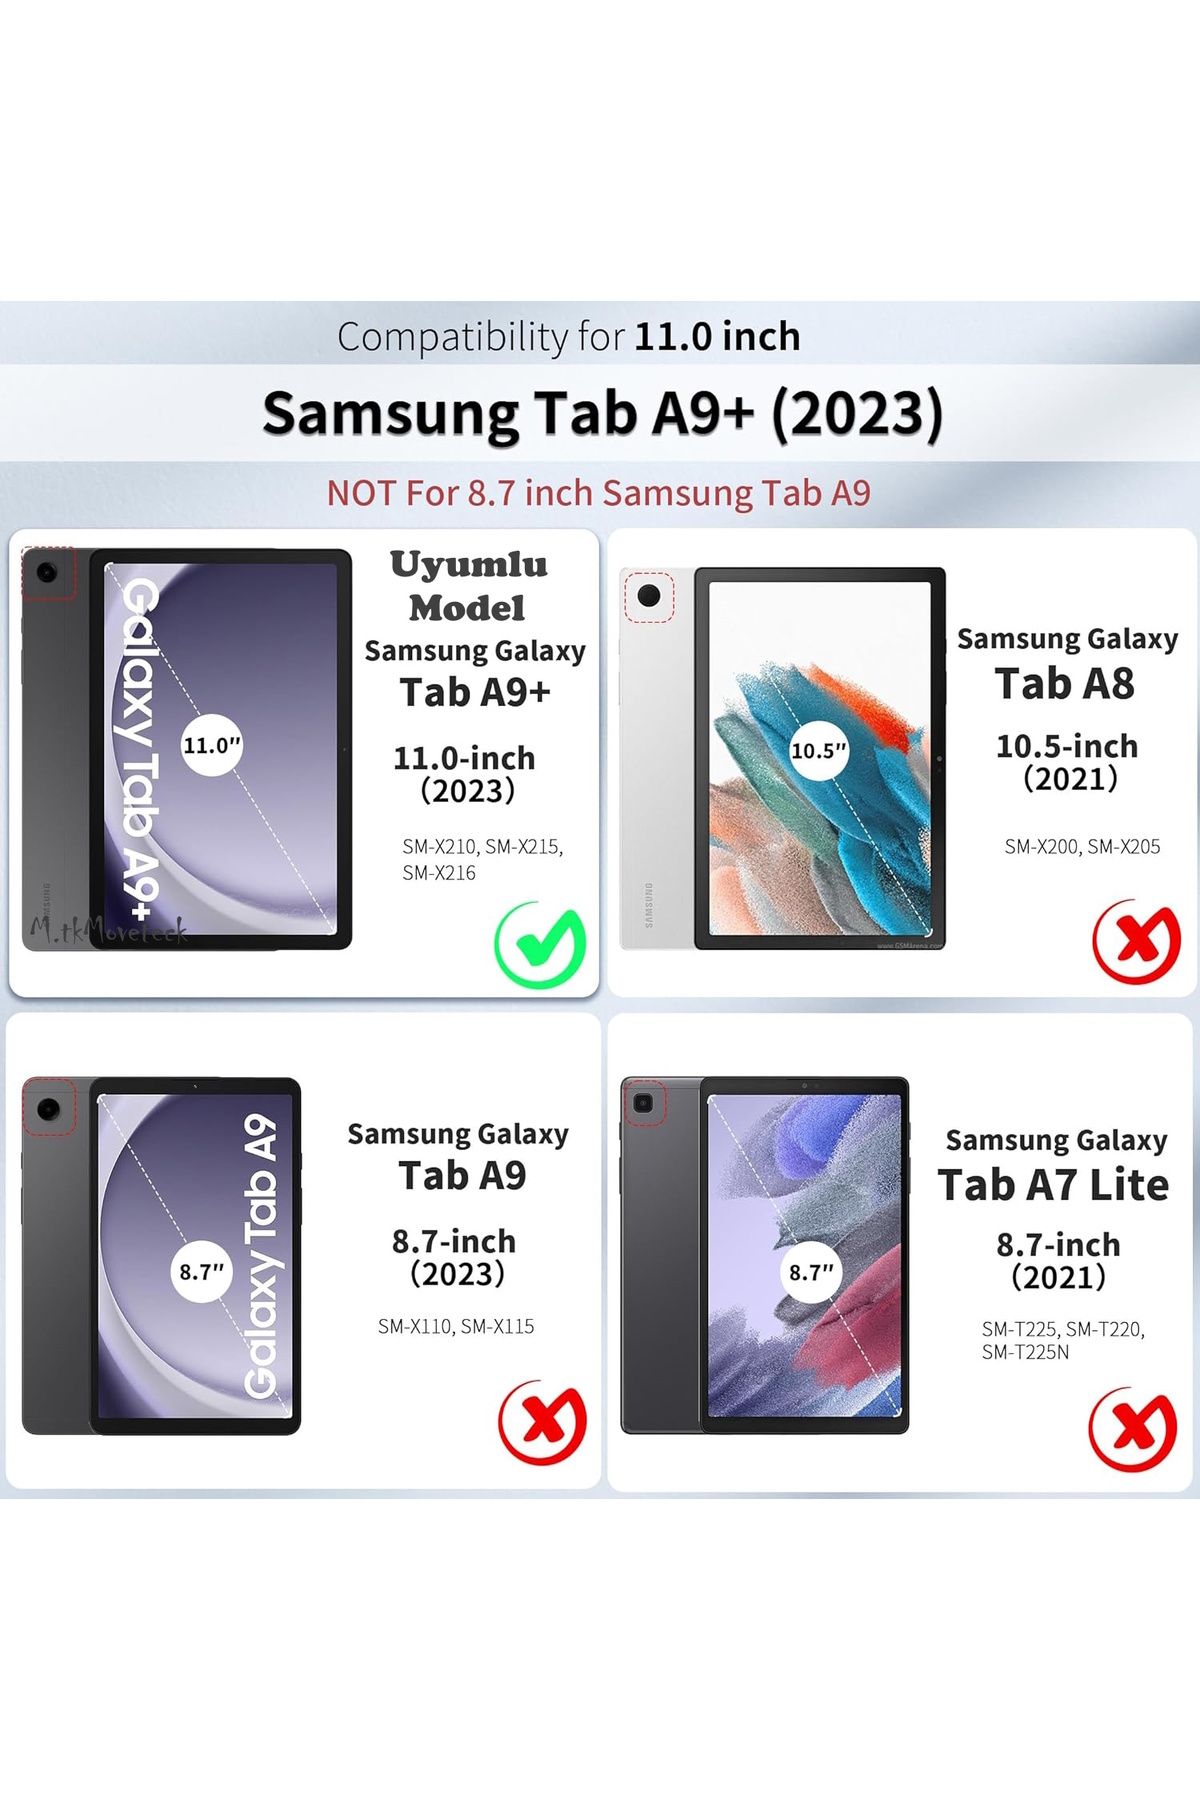 m.tk moveteck Samsung Galaxy Tab A9 Plus 11 Inch Tablet Compatible